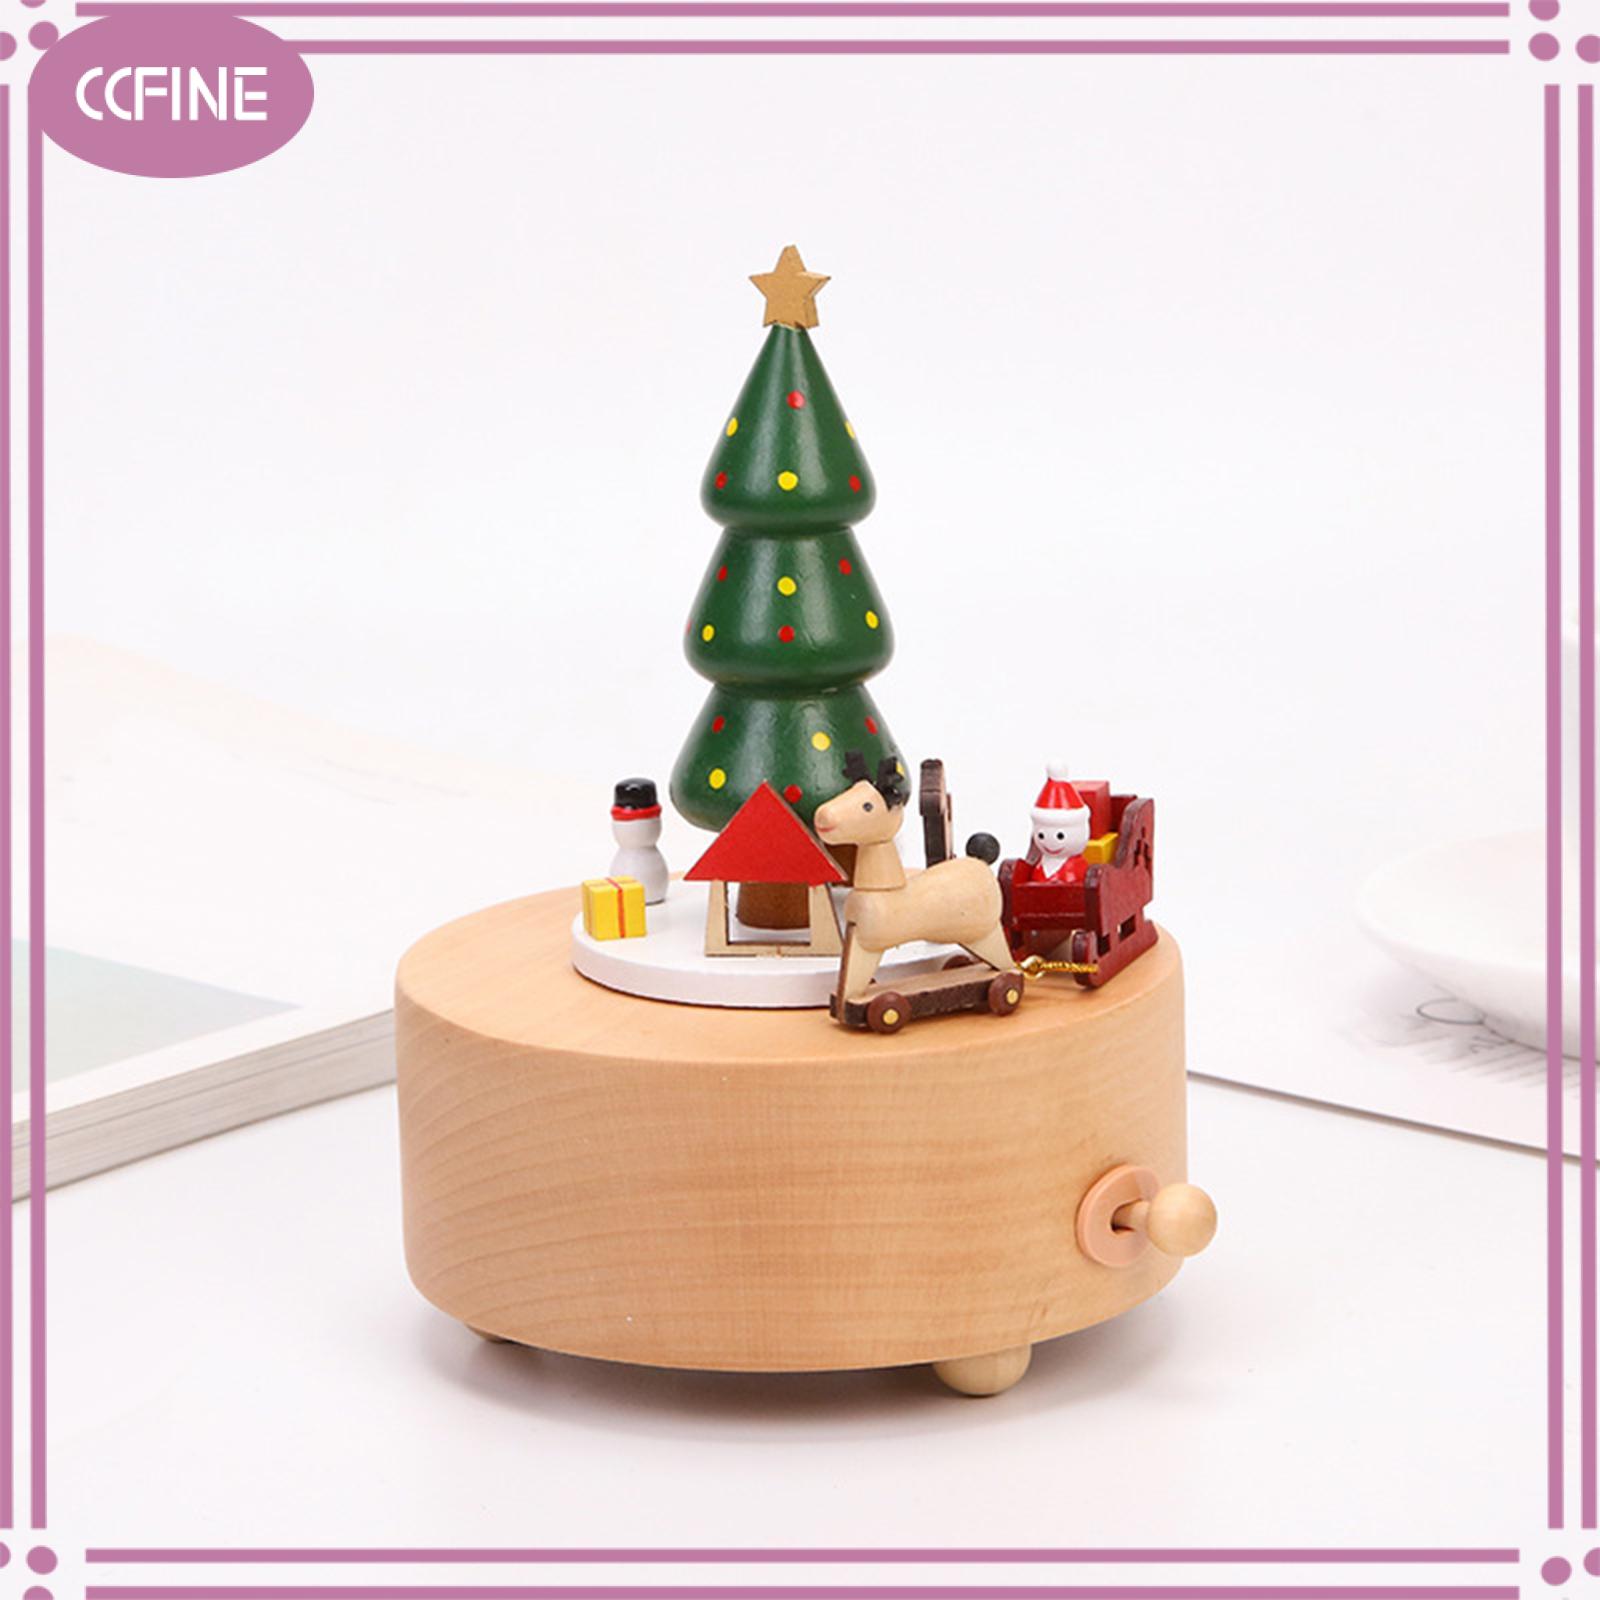 CCFine Portable Christmas Music Box Rotatable Wood Musical Box Carousel